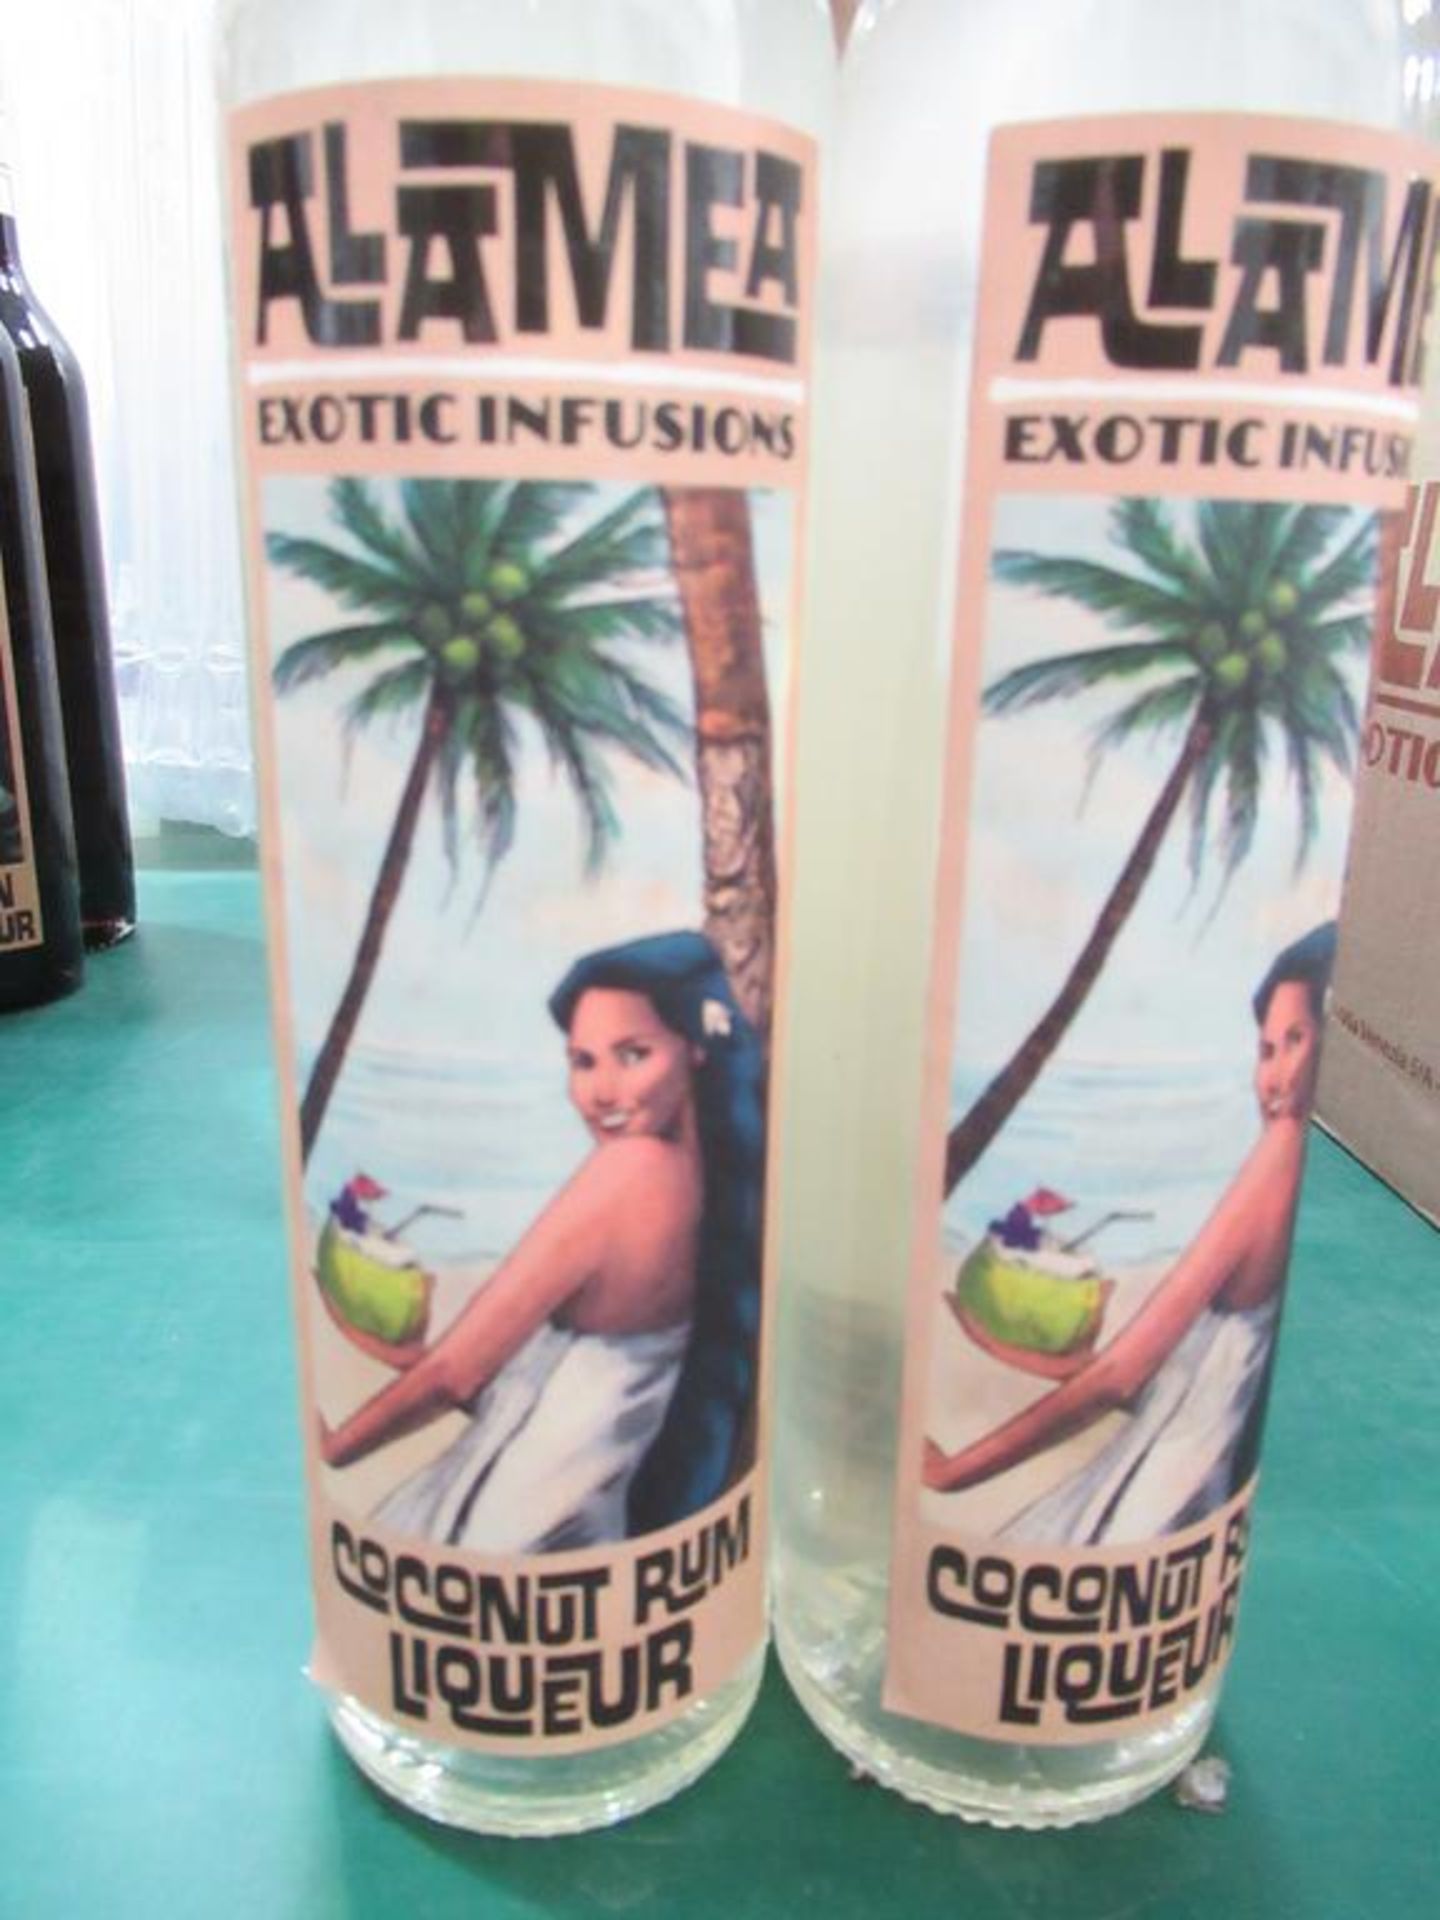 6 x bottles of Alamea coconut rum liqueur - Image 2 of 3